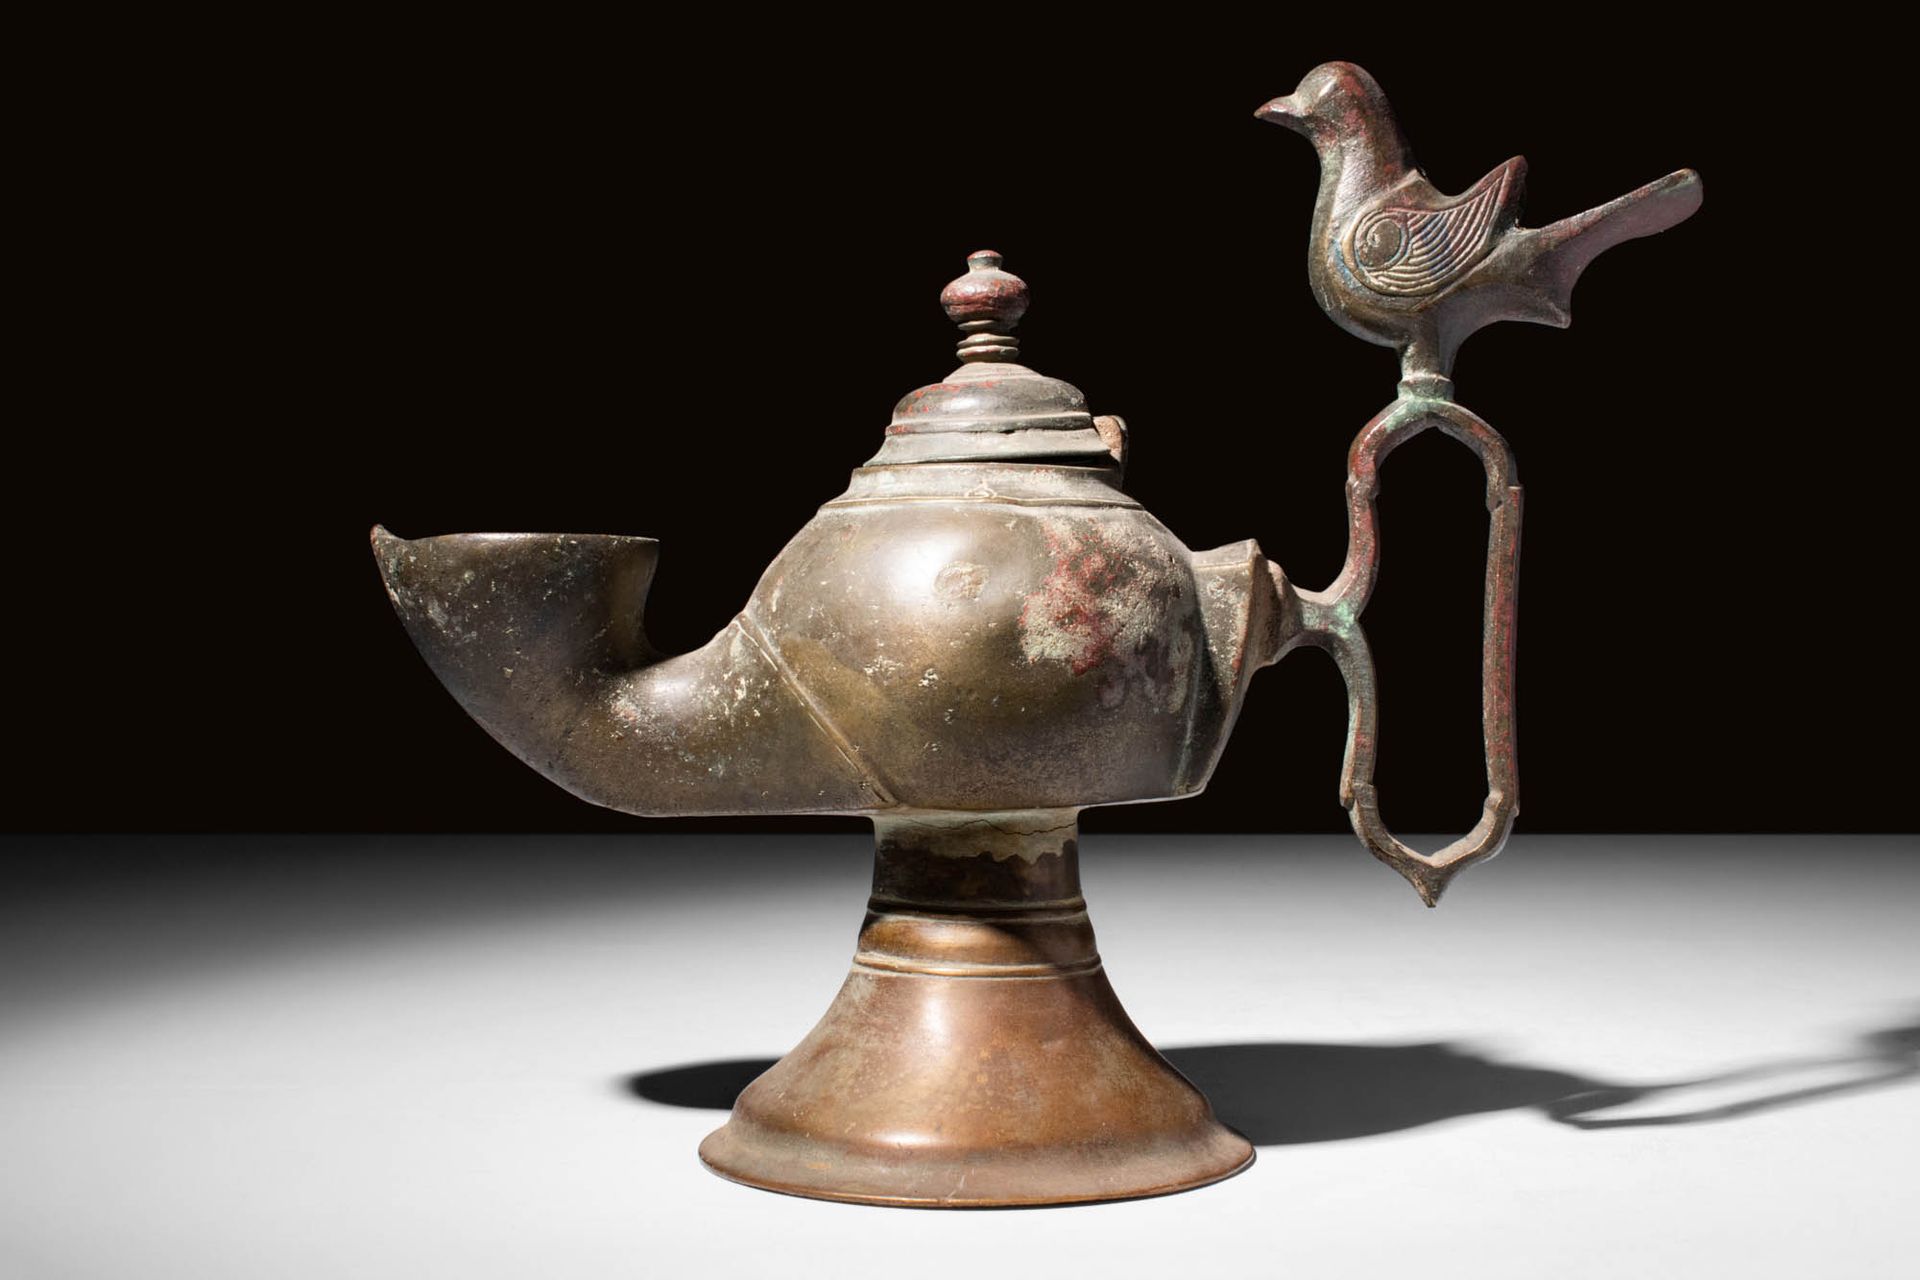 MEDIEVAL SELJUK BRONZE OIL LAMP Ca.约 1100-1300 年。
这是一盏中世纪塞尔柱青铜油灯，灯身呈苹果形。油灯立于高而圆的&hellip;